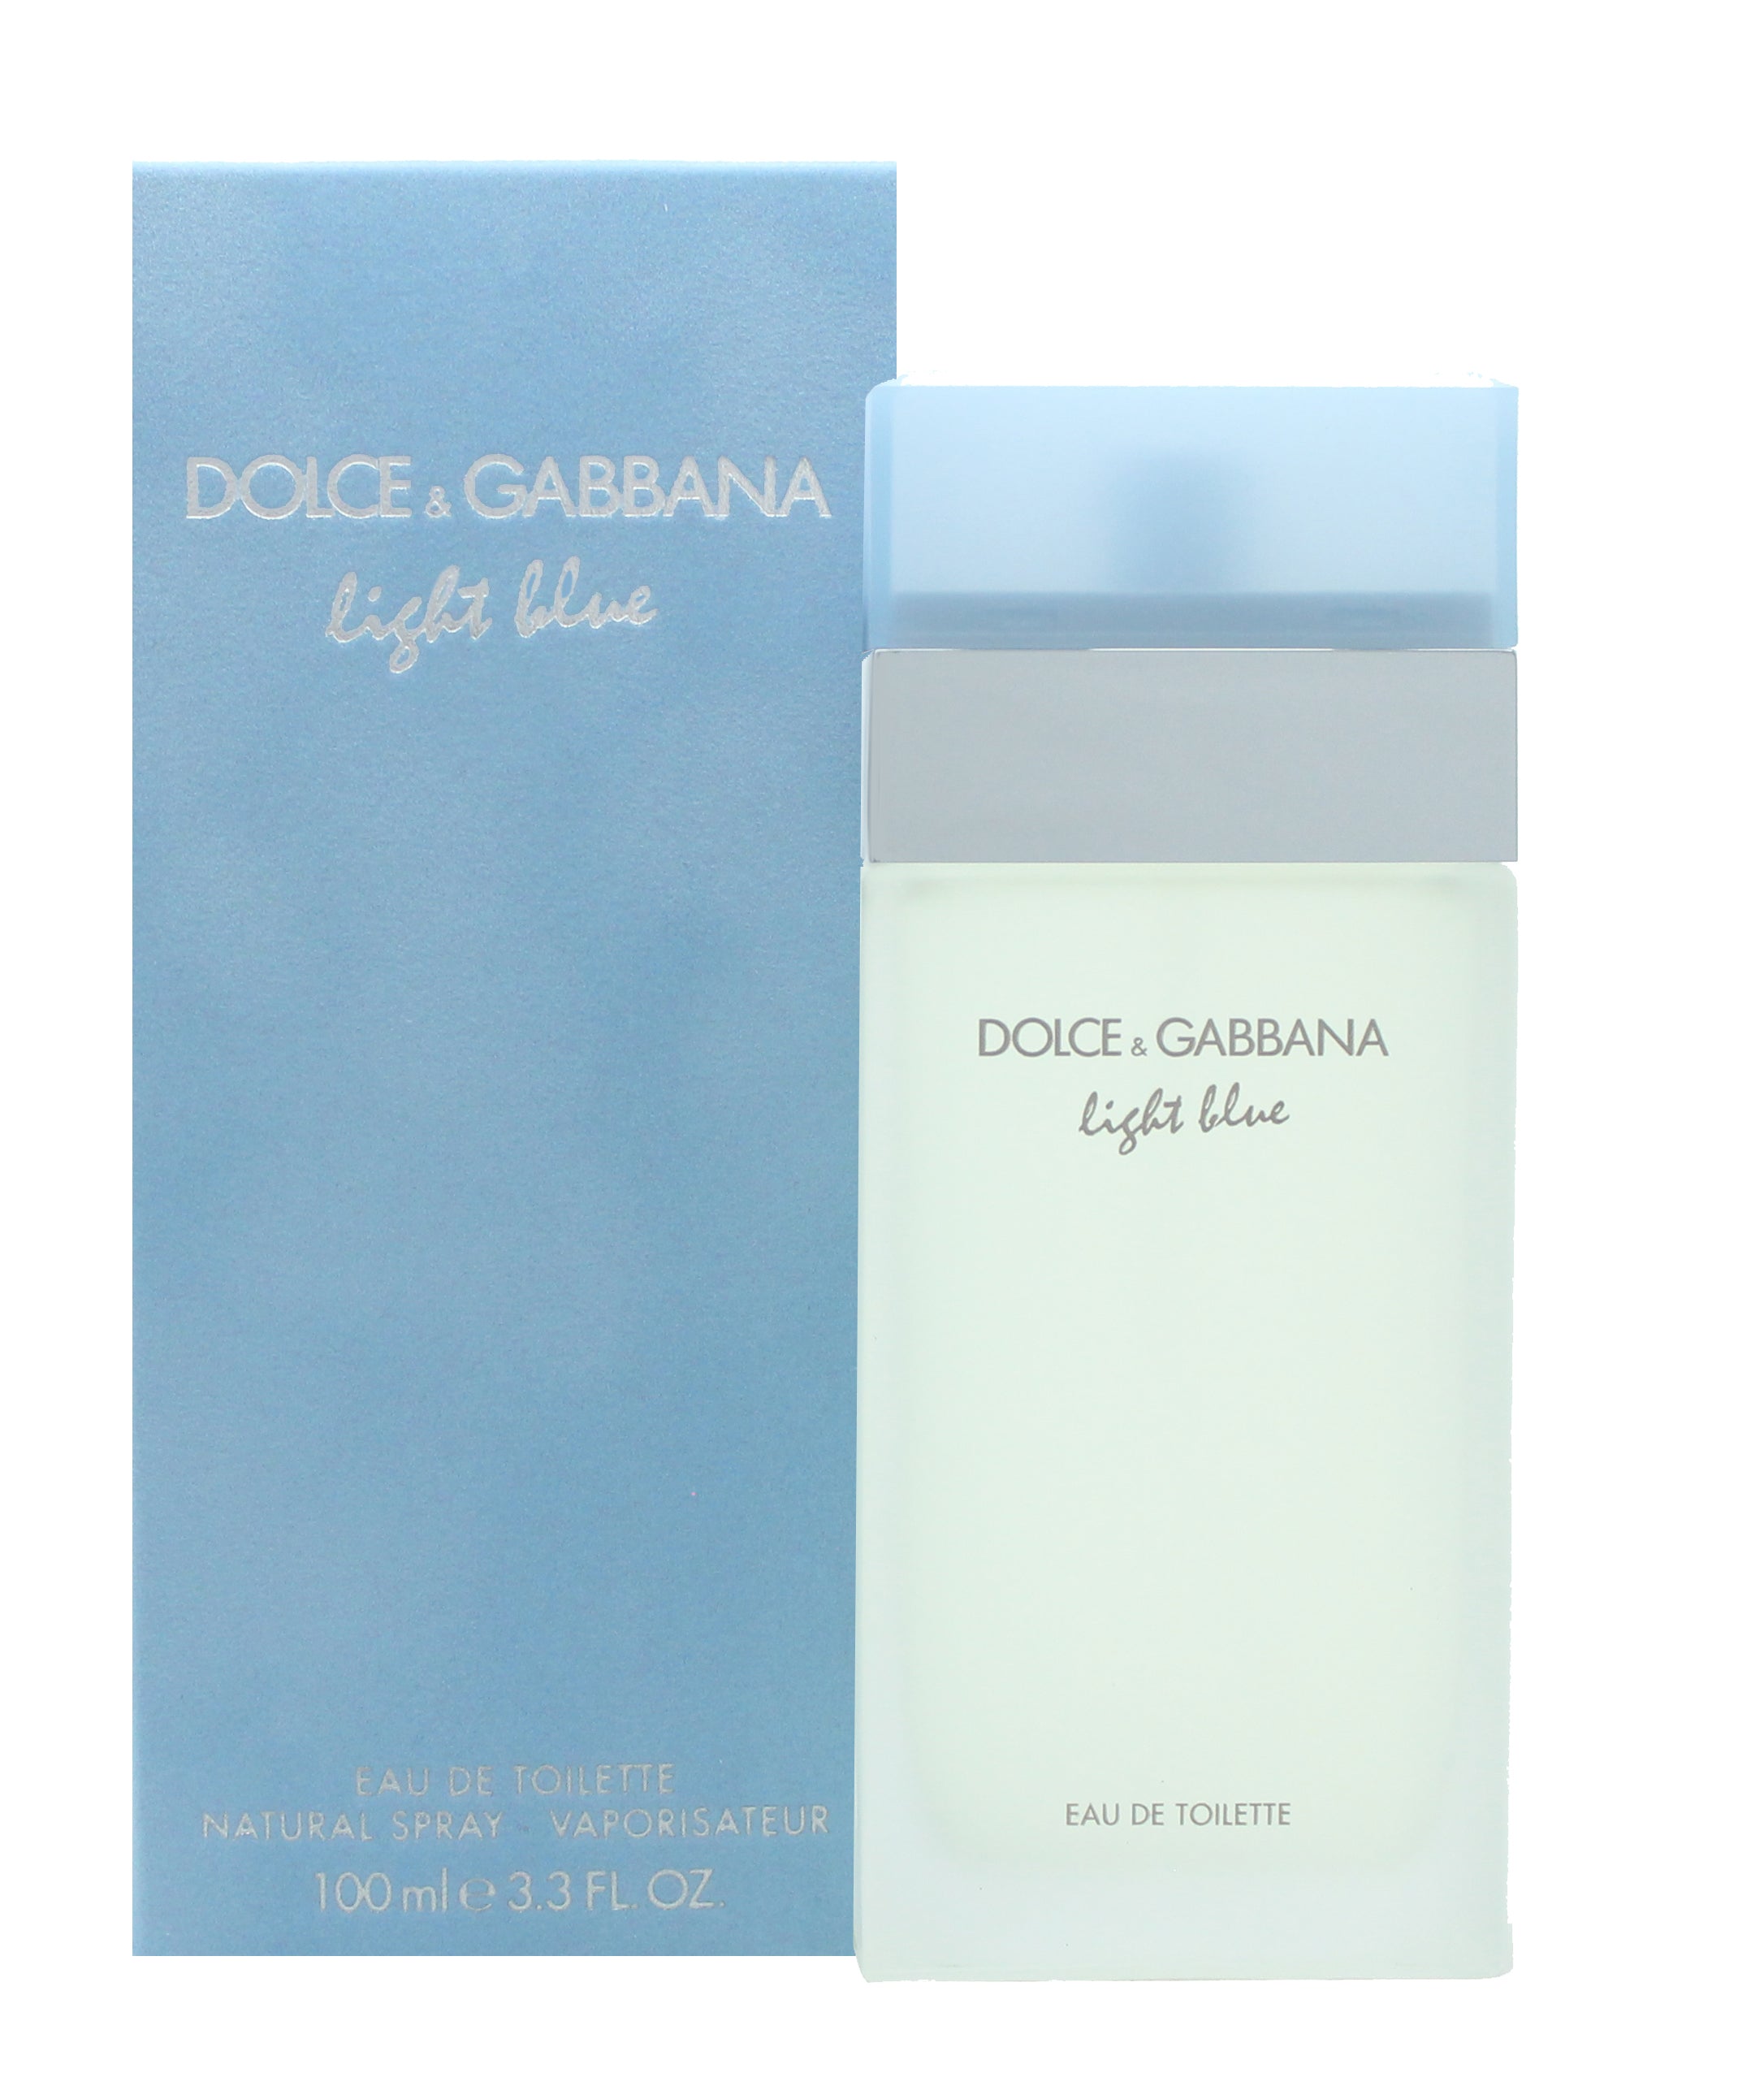 View Dolce Gabbana Light Blue Eau De Toilette 100ml Spray information